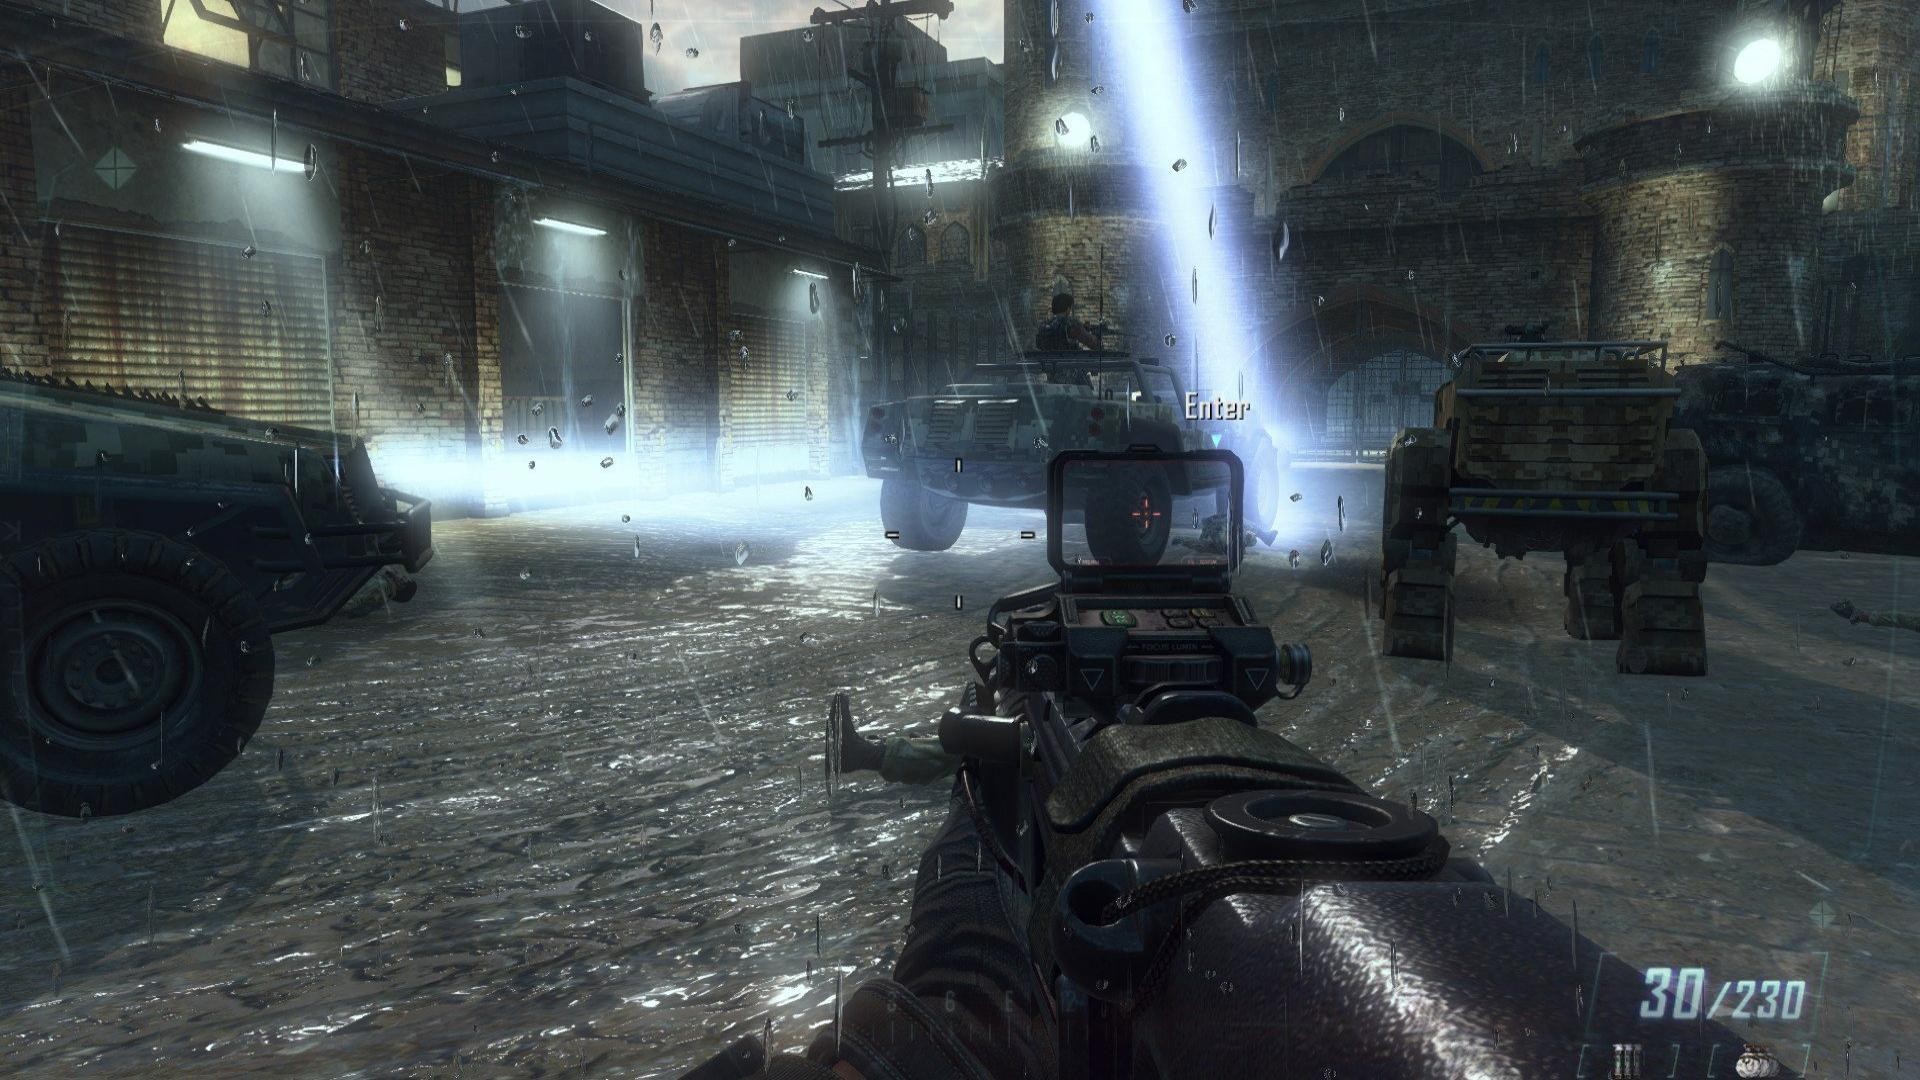 Игра кал оф опс 2. Блэк ОПС 2. Call of Duty Black ops 2. Блэк ОПС 2010. Call of Duty: Black ops 2 - Apocalypse.